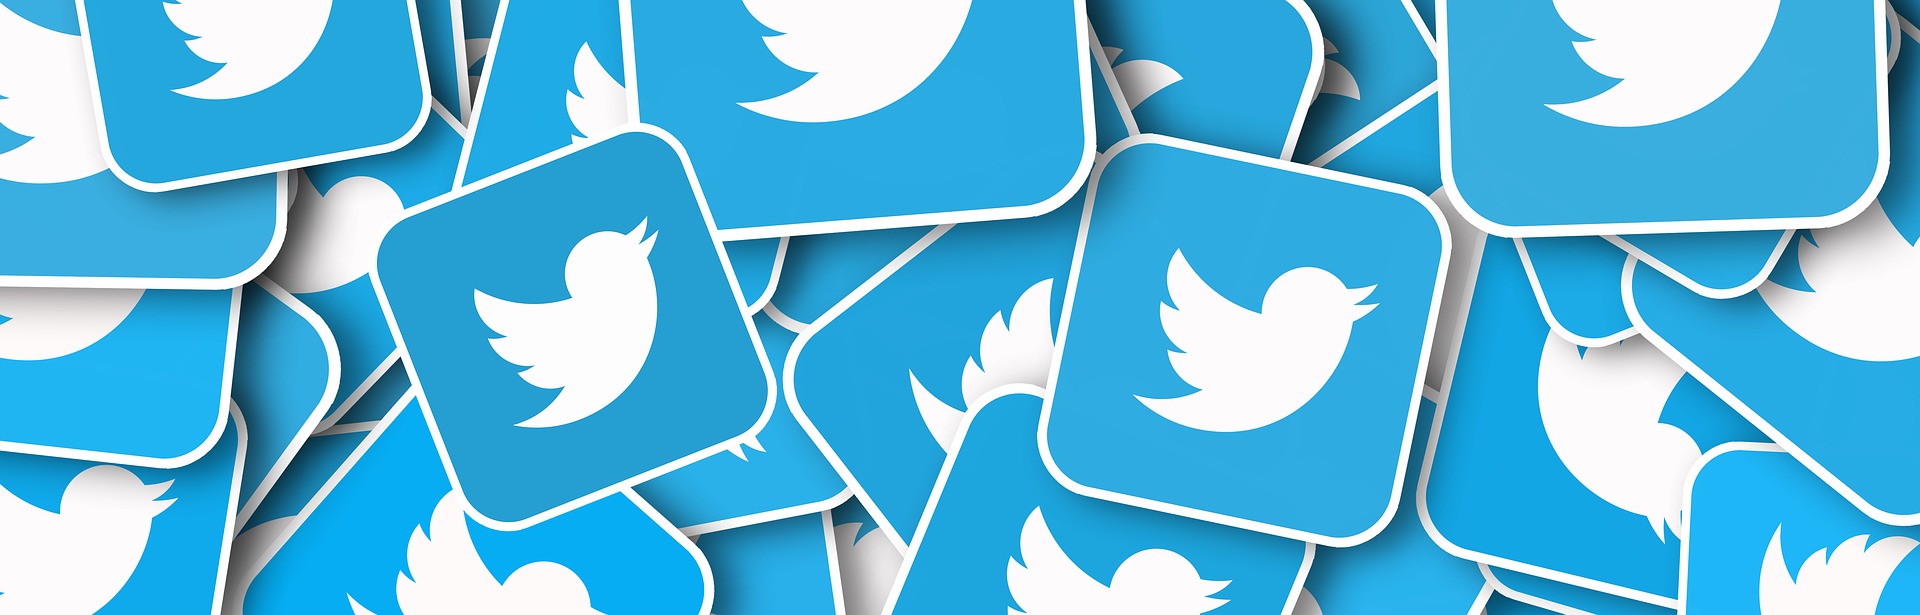 Twitter dice addio al limite caratteri